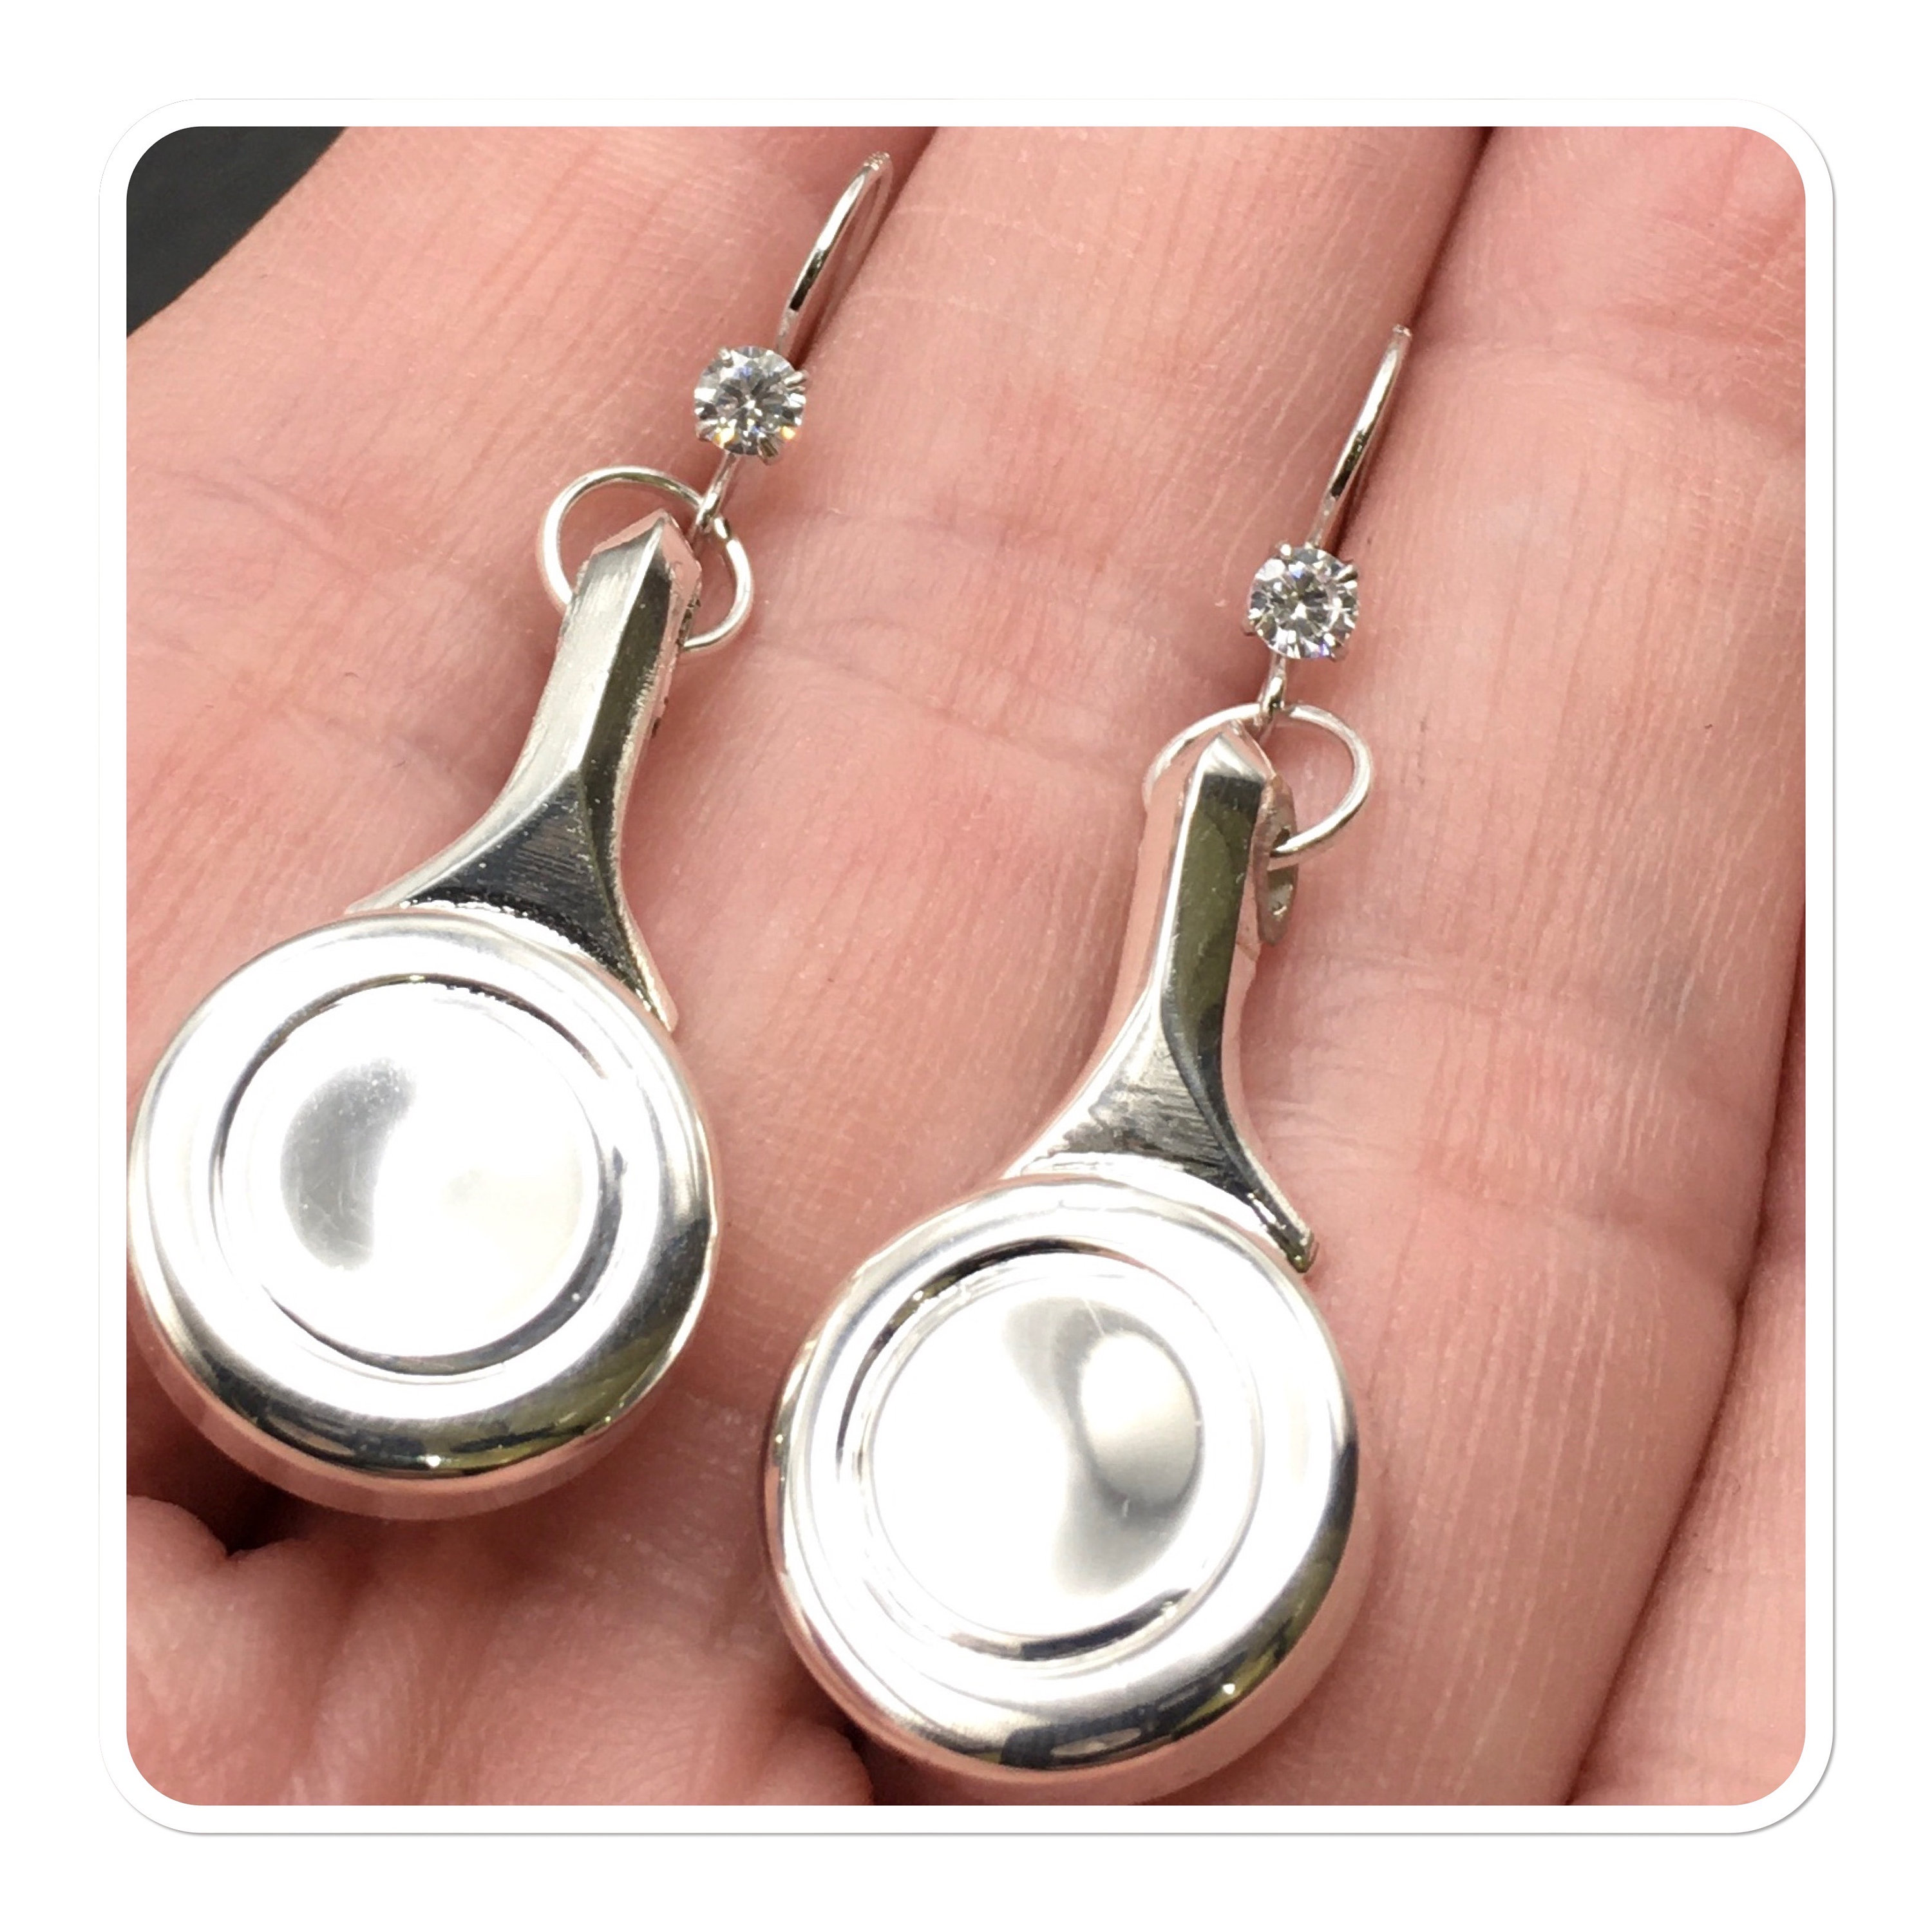 Wholesale 925 sterling silver fishhook earring hooks with spring, french  hook earring wires for jewelry making, sensitive ear earring hooks